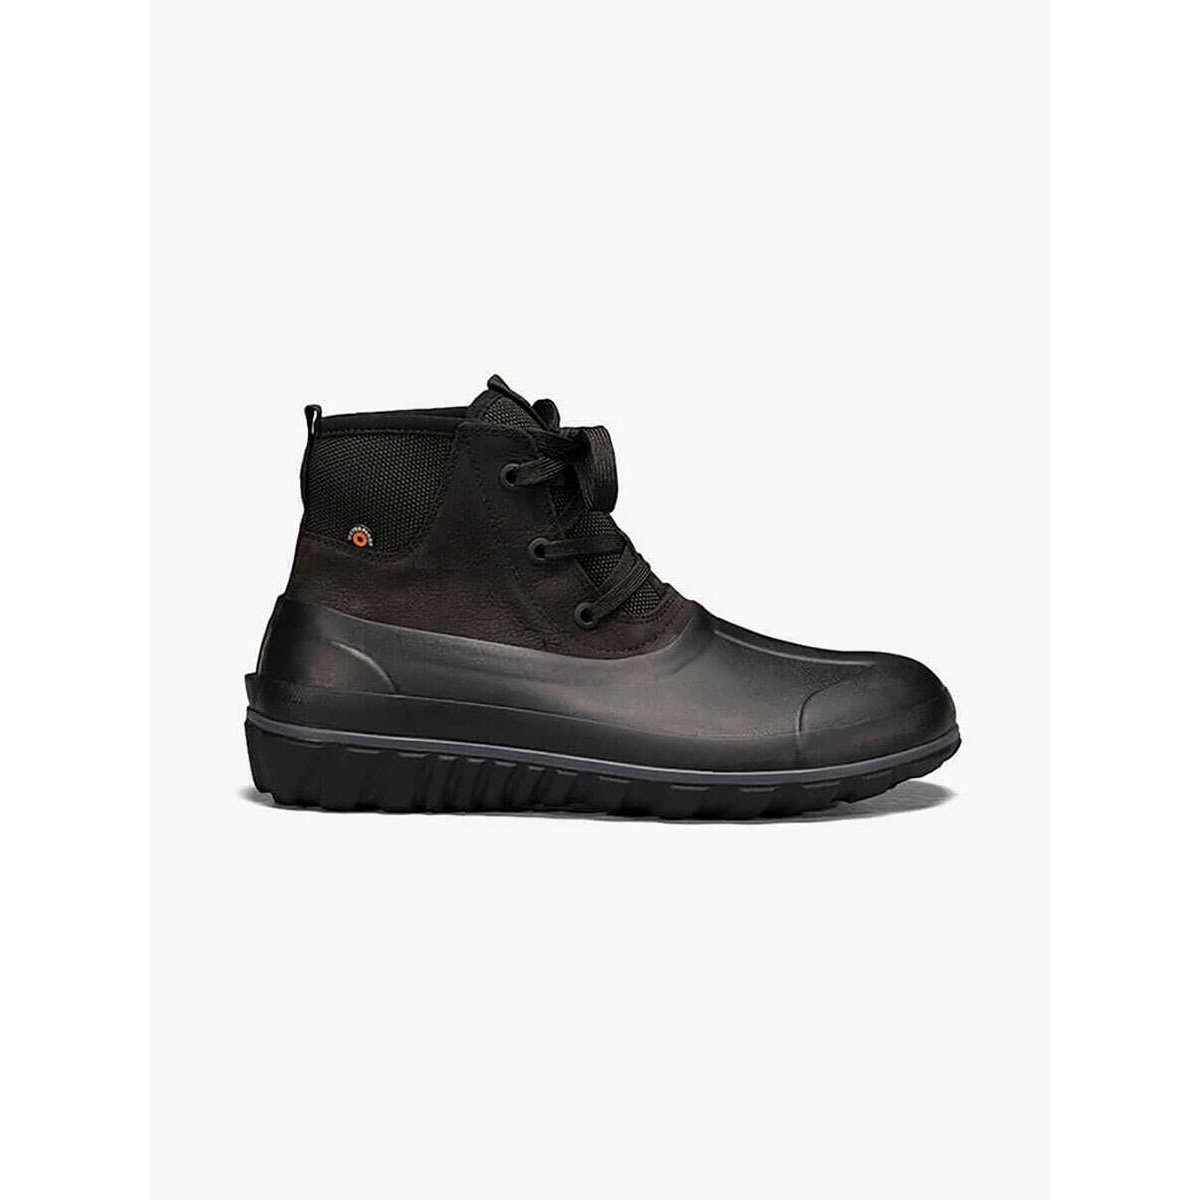 BOGS Men's Casual Lace Waterproof Leather Snow Boots Black - 72620-001 001 Black - 001 Black, 8-M